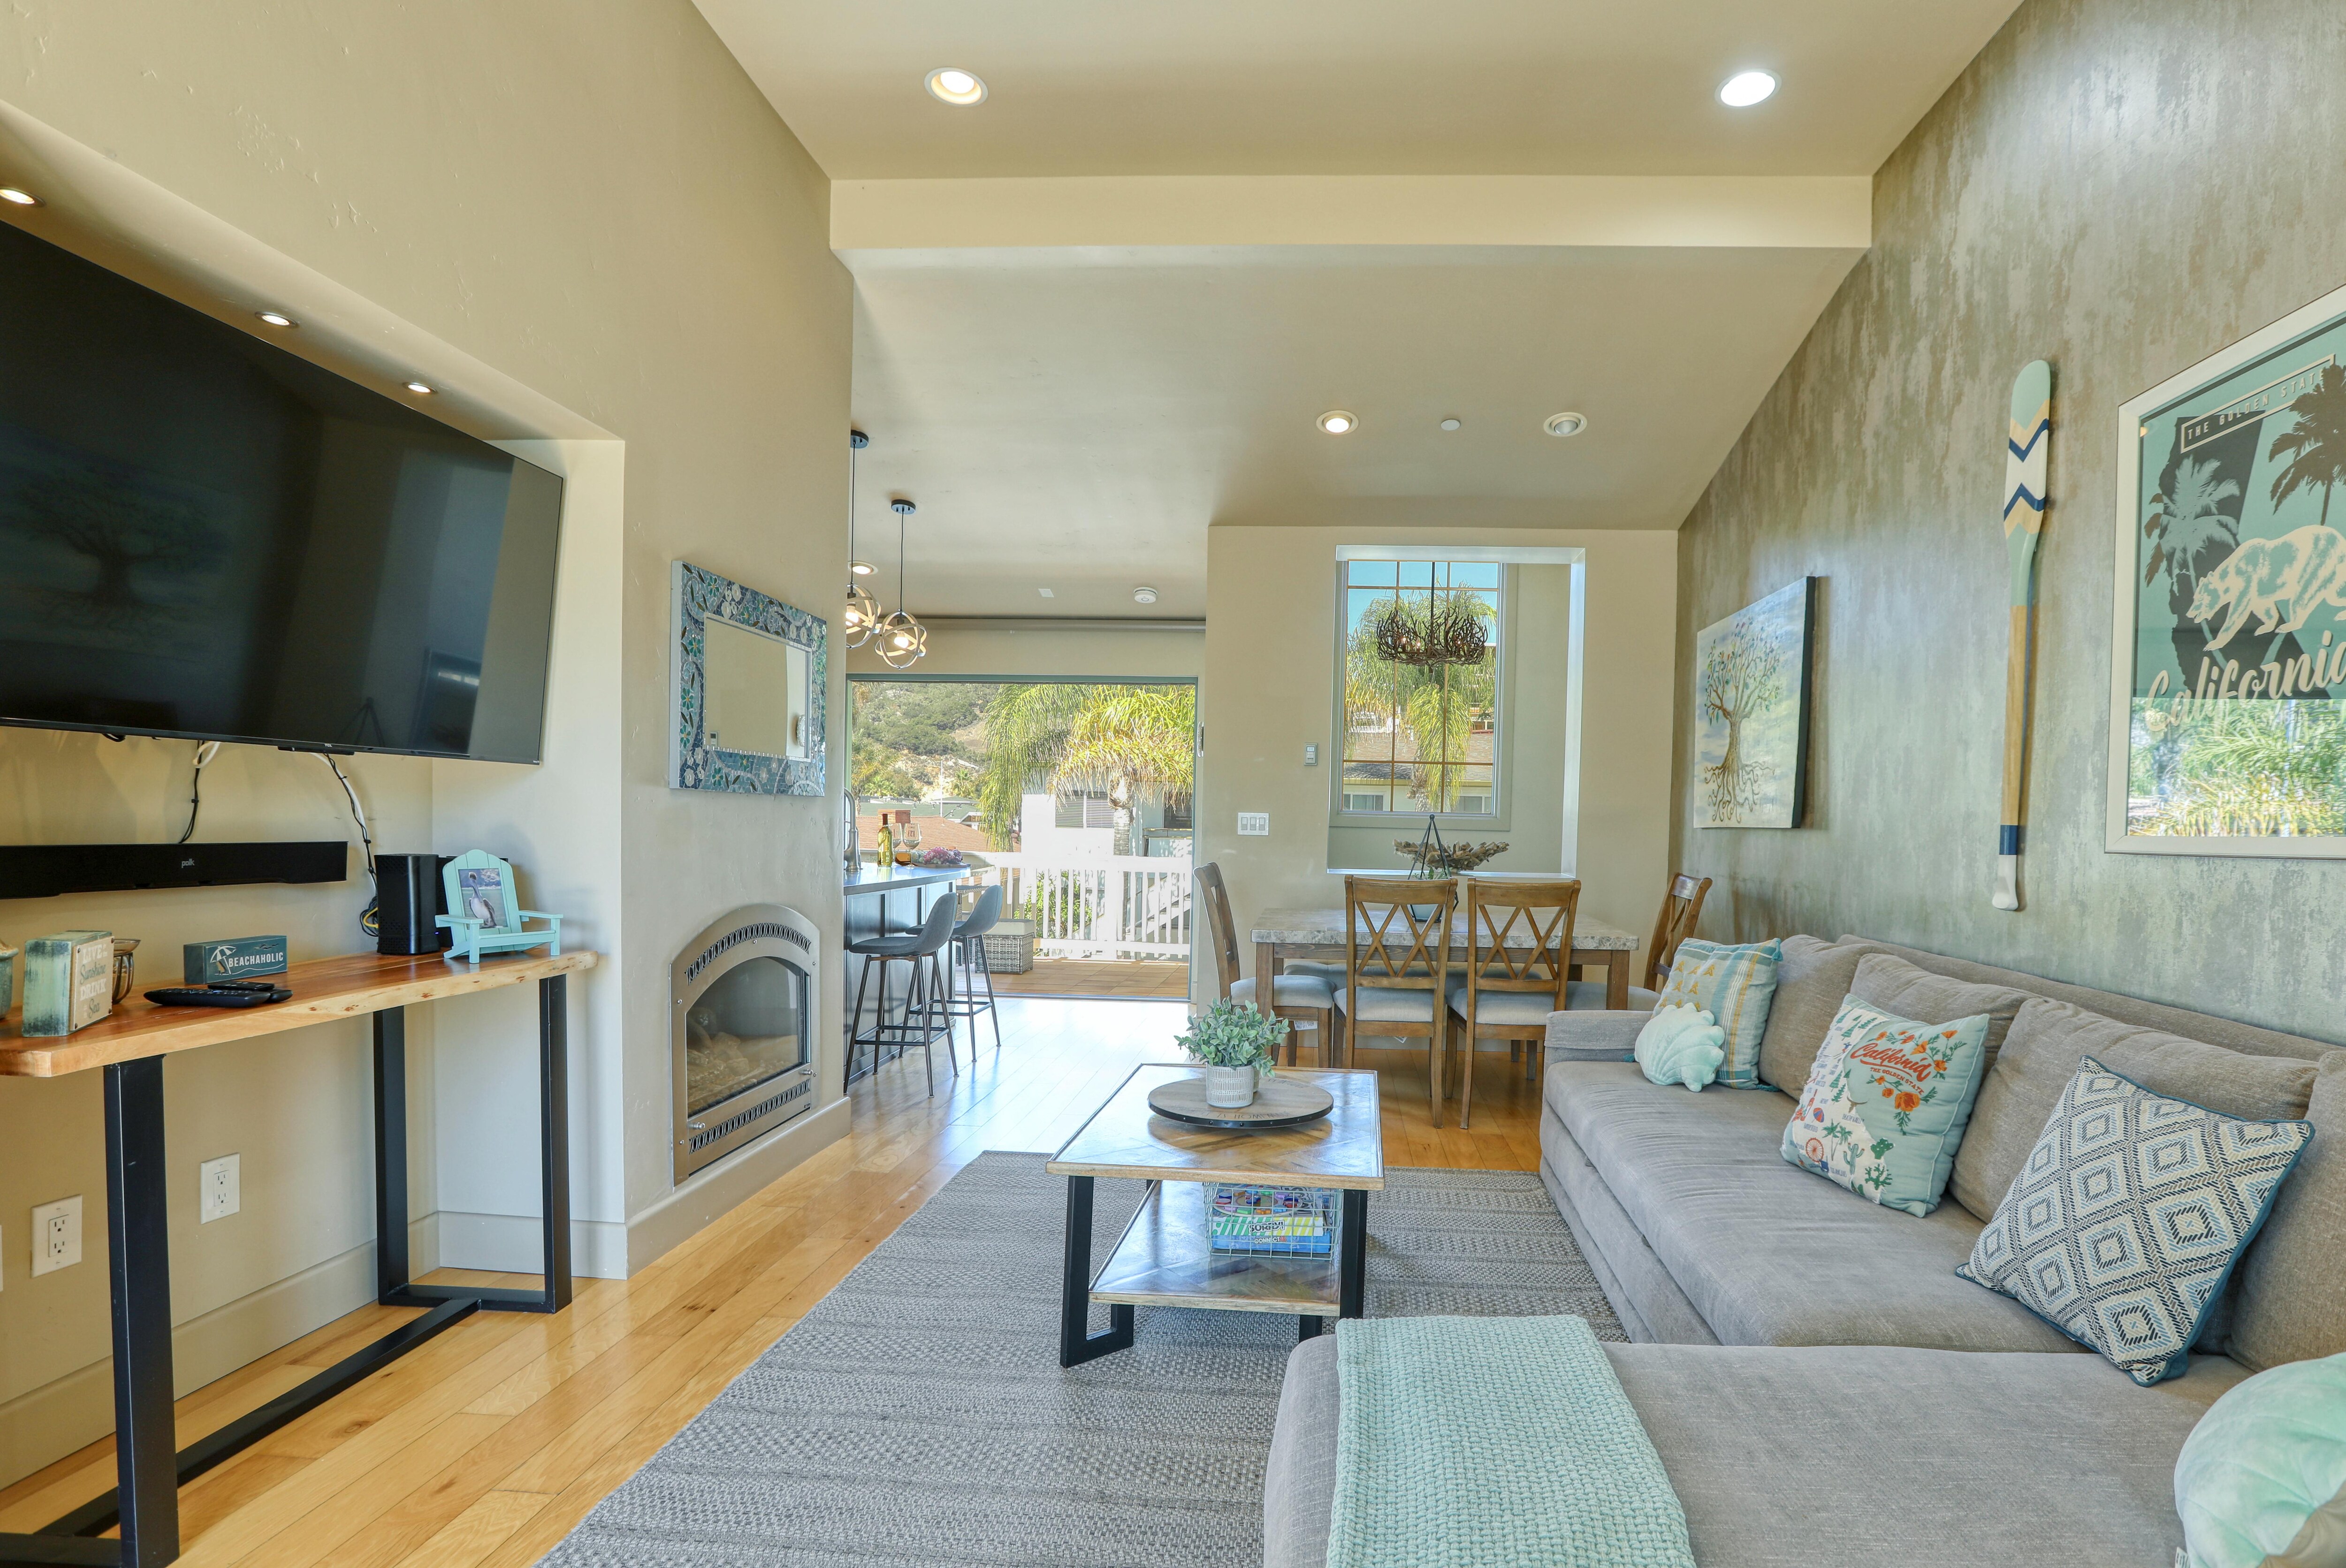 Open concept design blends indoor and outdoor living space.